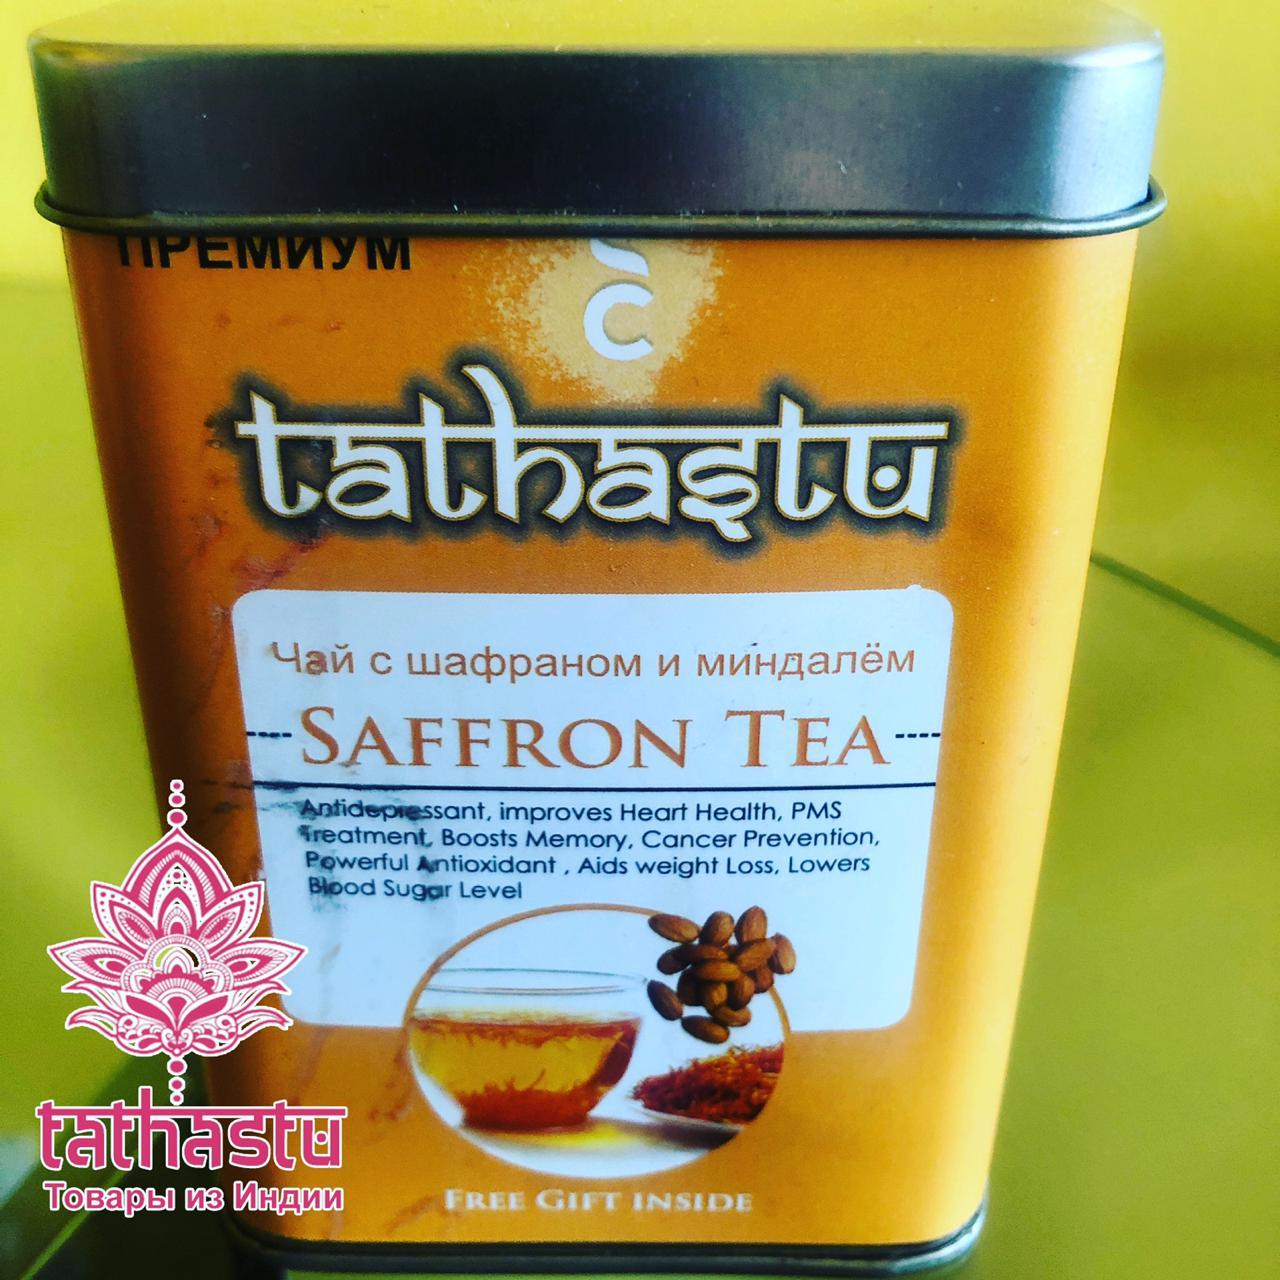 Tathastu Чай с шафраном. Tathastu товары и индии